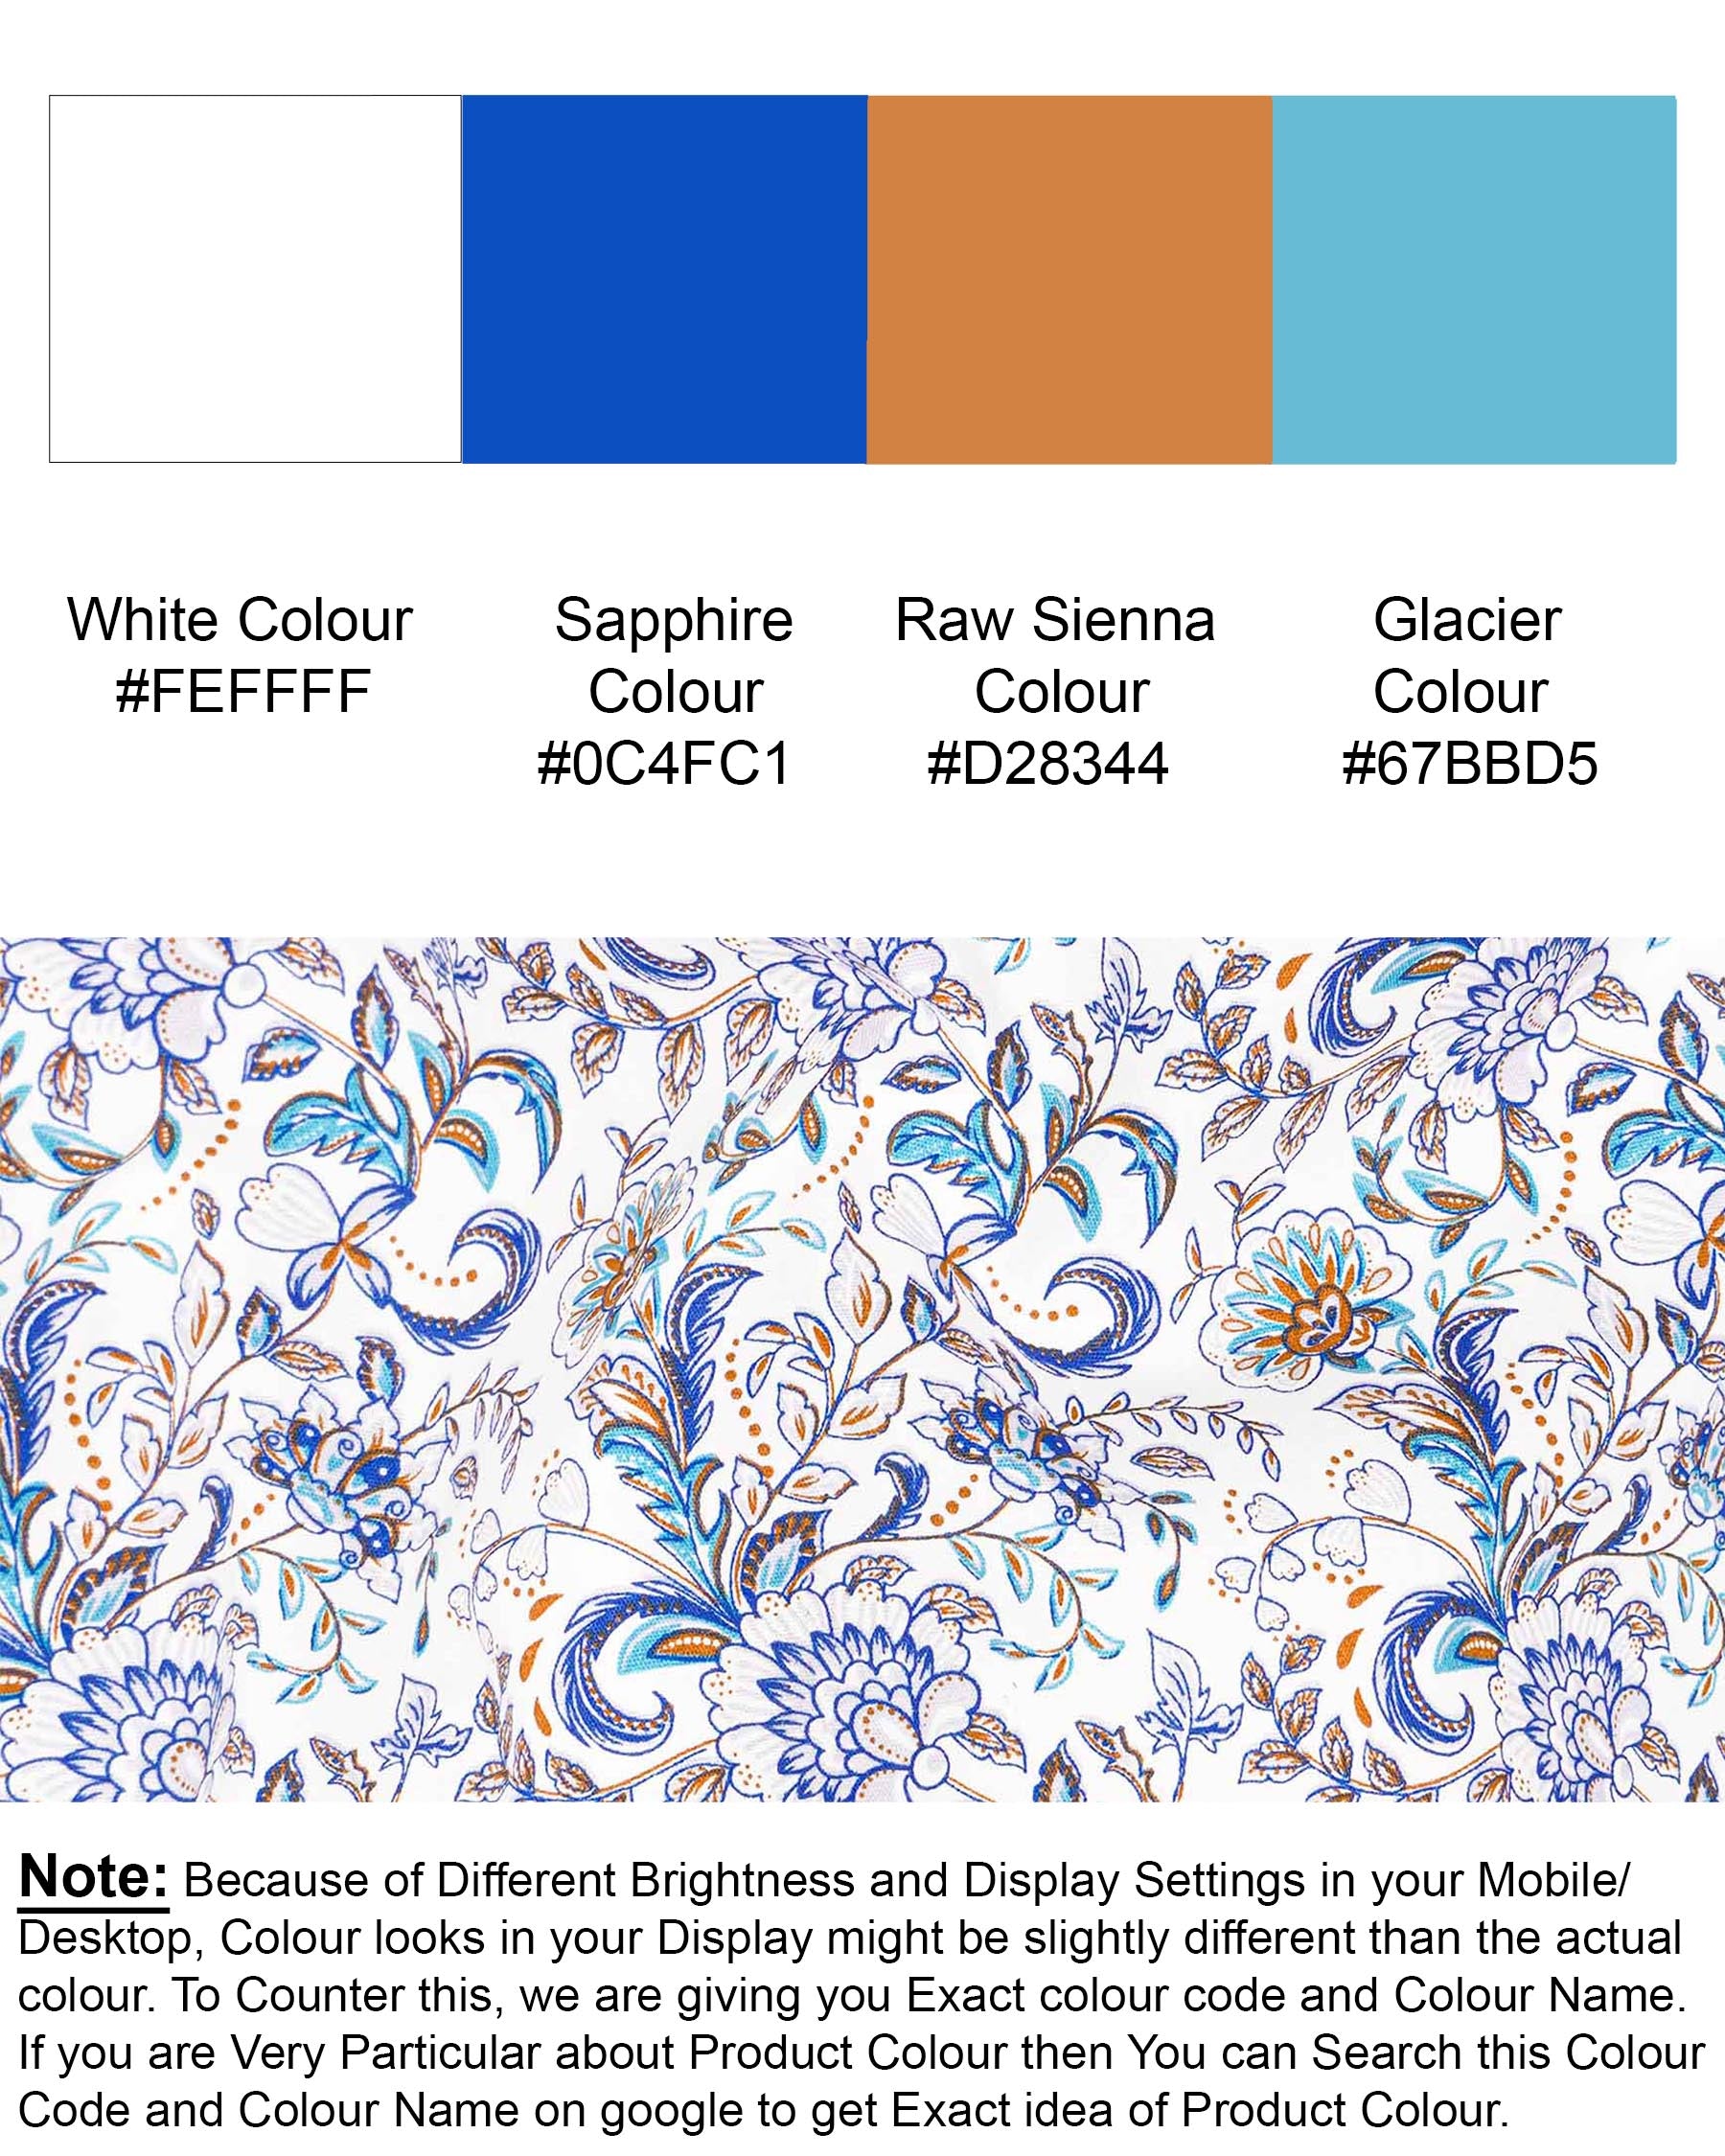 Bright White Multicolour Chintz Printed Twill Premium Cotton Shirt 7191-BLE-38,7191-BLE-H-38,7191-BLE-39,7191-BLE-H-39,7191-BLE-40,7191-BLE-H-40,7191-BLE-42,7191-BLE-H-42,7191-BLE-44,7191-BLE-H-44,7191-BLE-46,7191-BLE-H-46,7191-BLE-48,7191-BLE-H-48,7191-BLE-50,7191-BLE-H-50,7191-BLE-52,7191-BLE-H-52